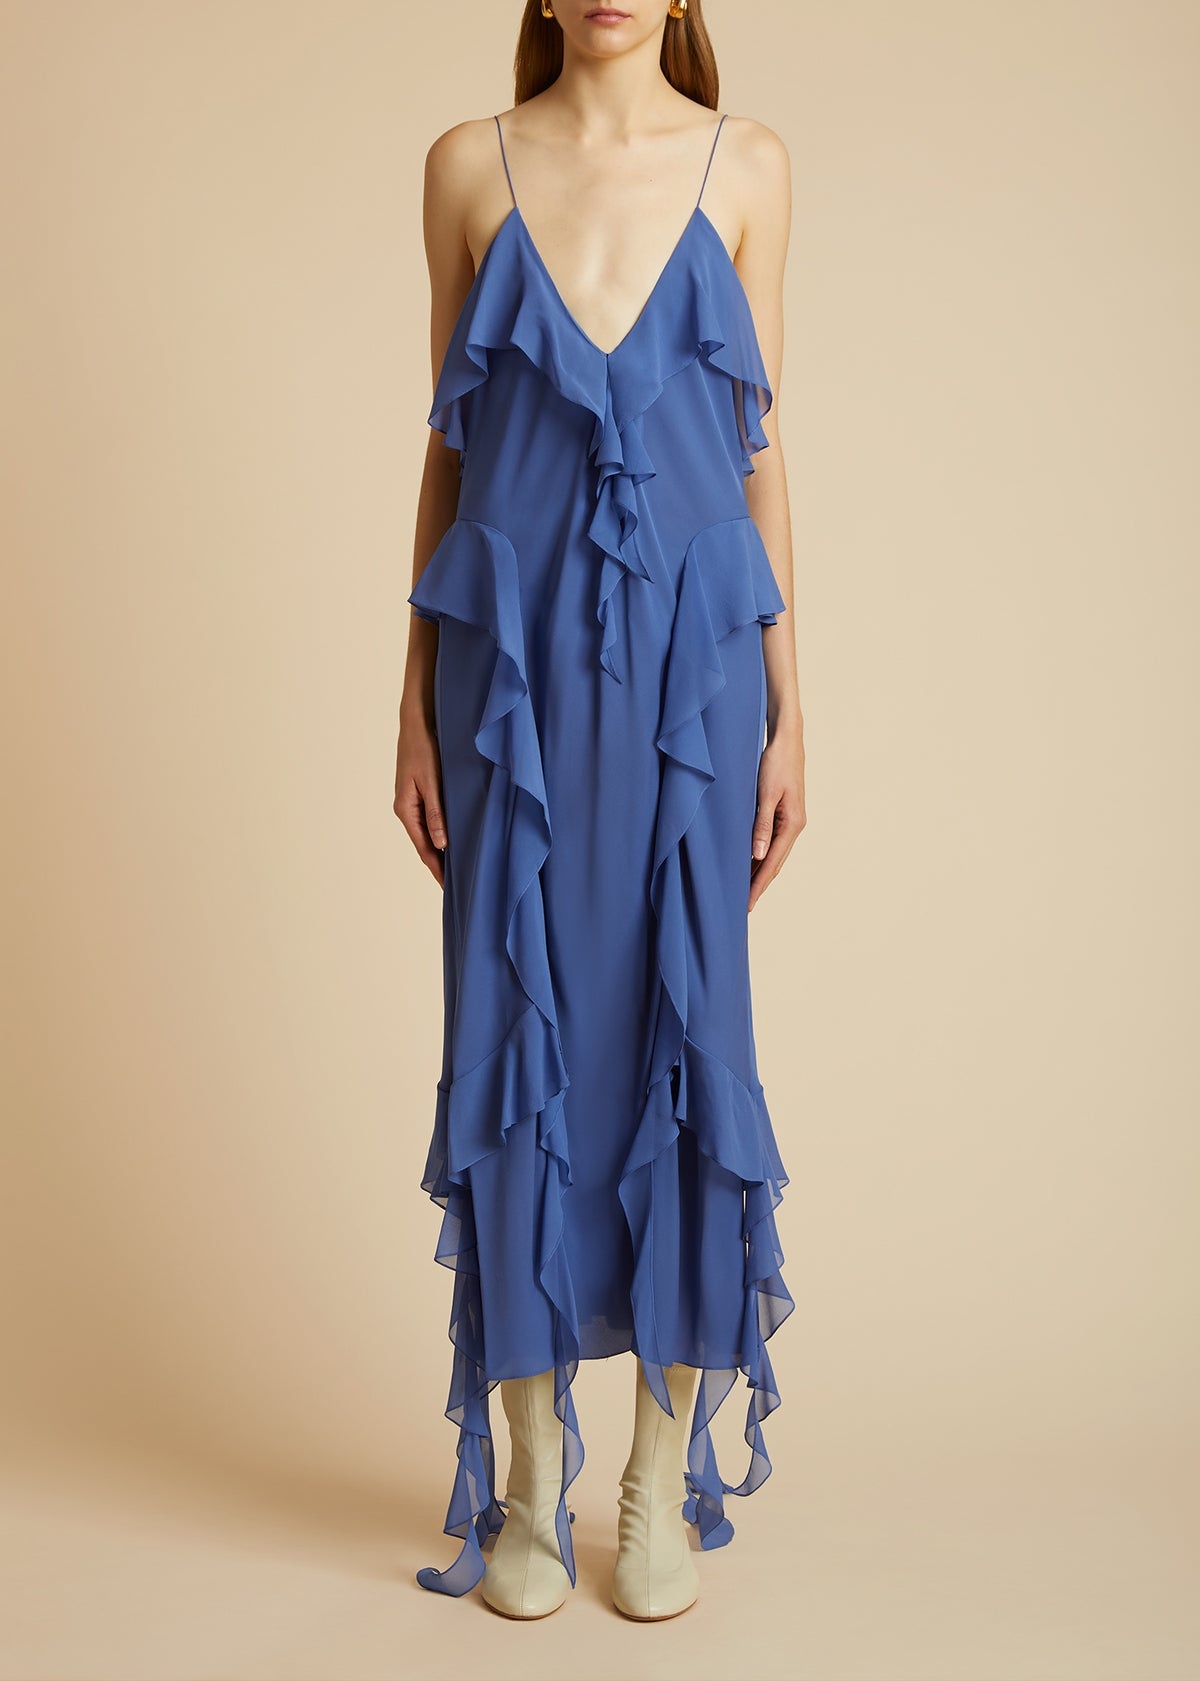 The Pim Dress in Blue Iris - 2